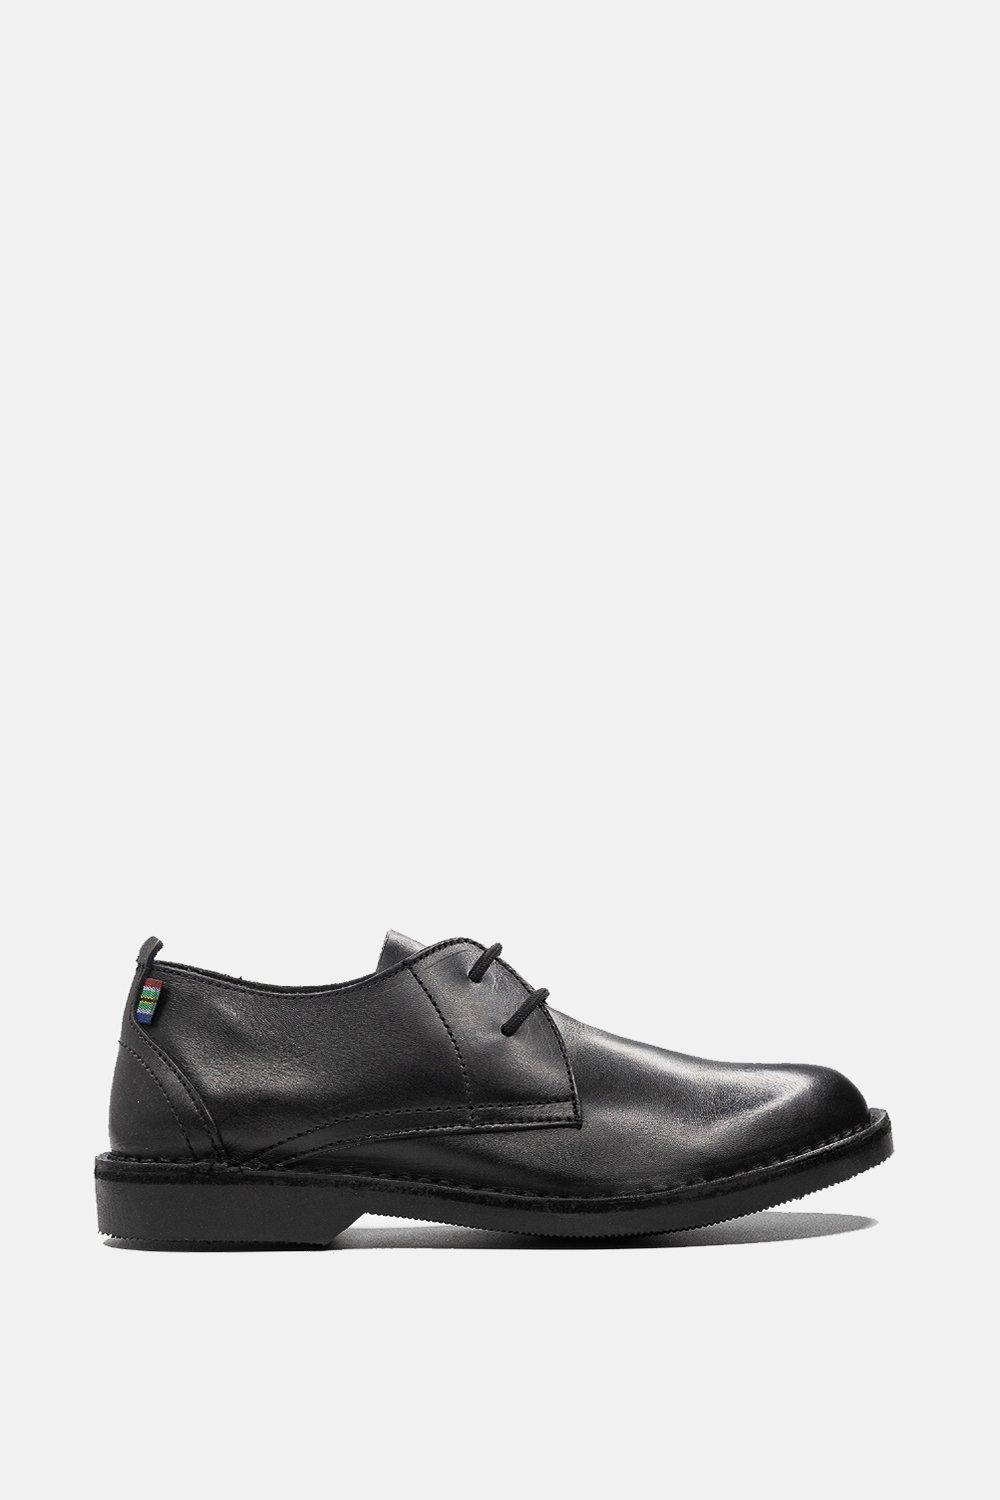 Кожаная умная обувь Veldskoen Shoes, черный